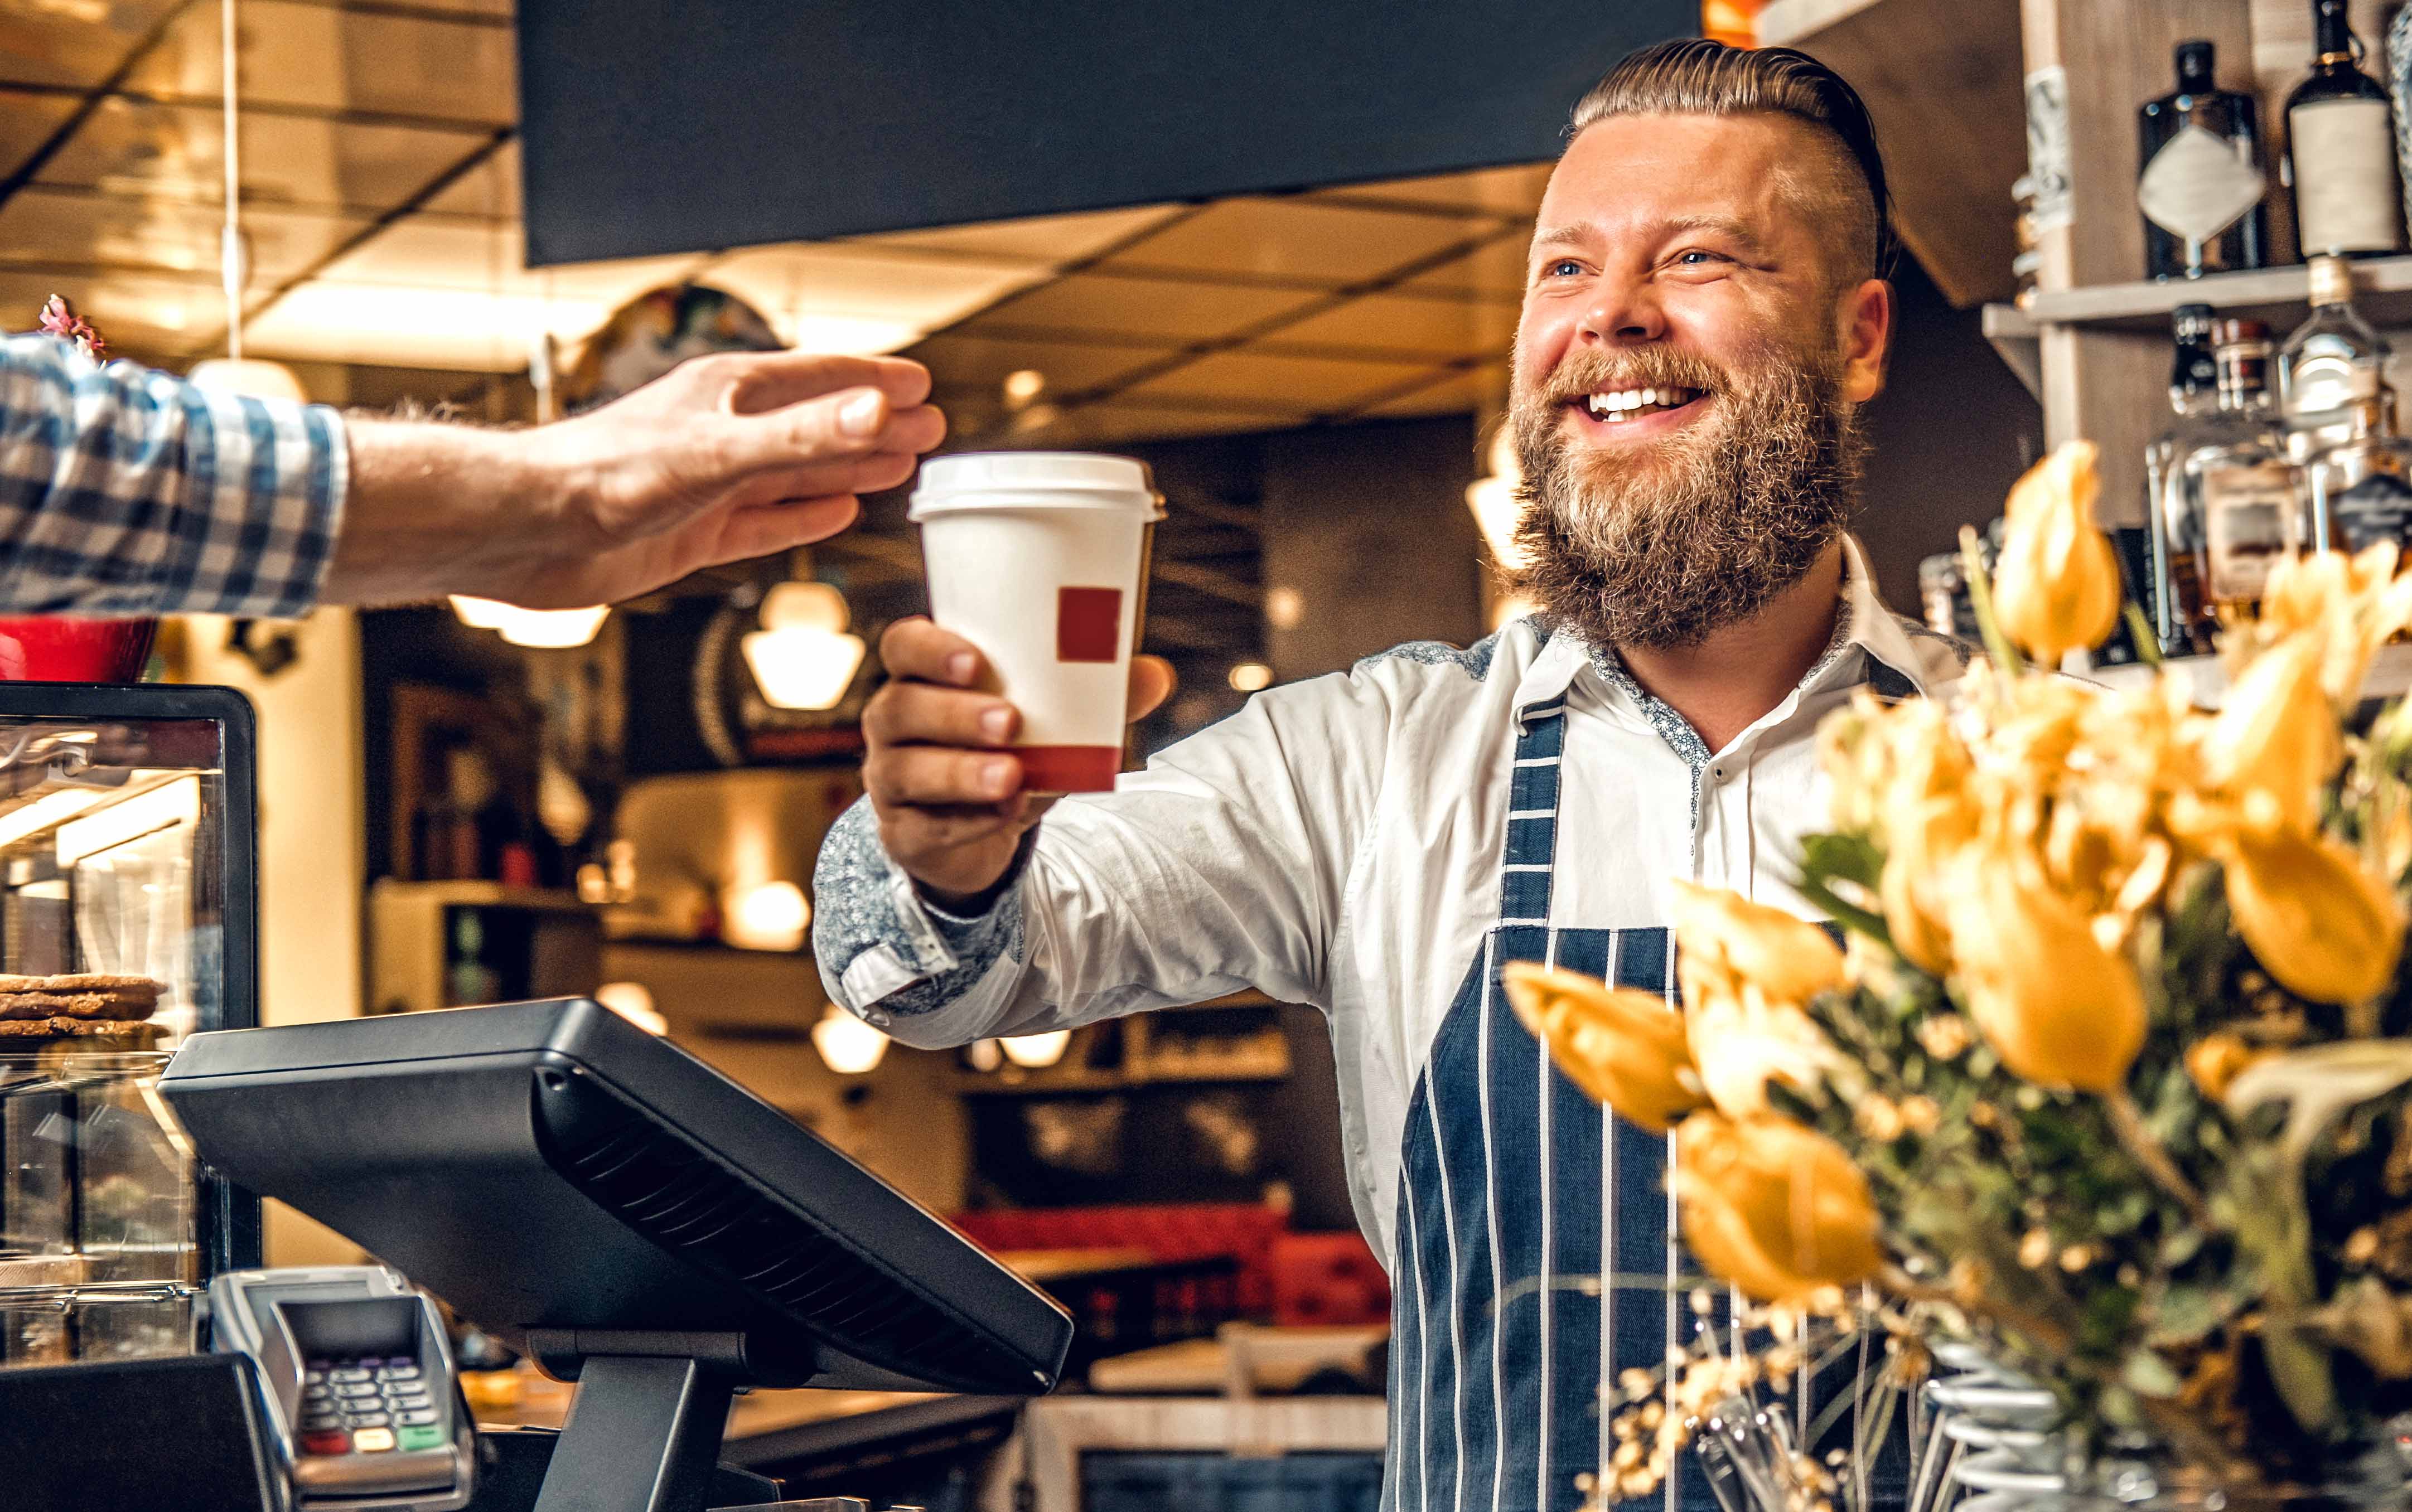 Coffee shop barista handing coffee to customer smiling